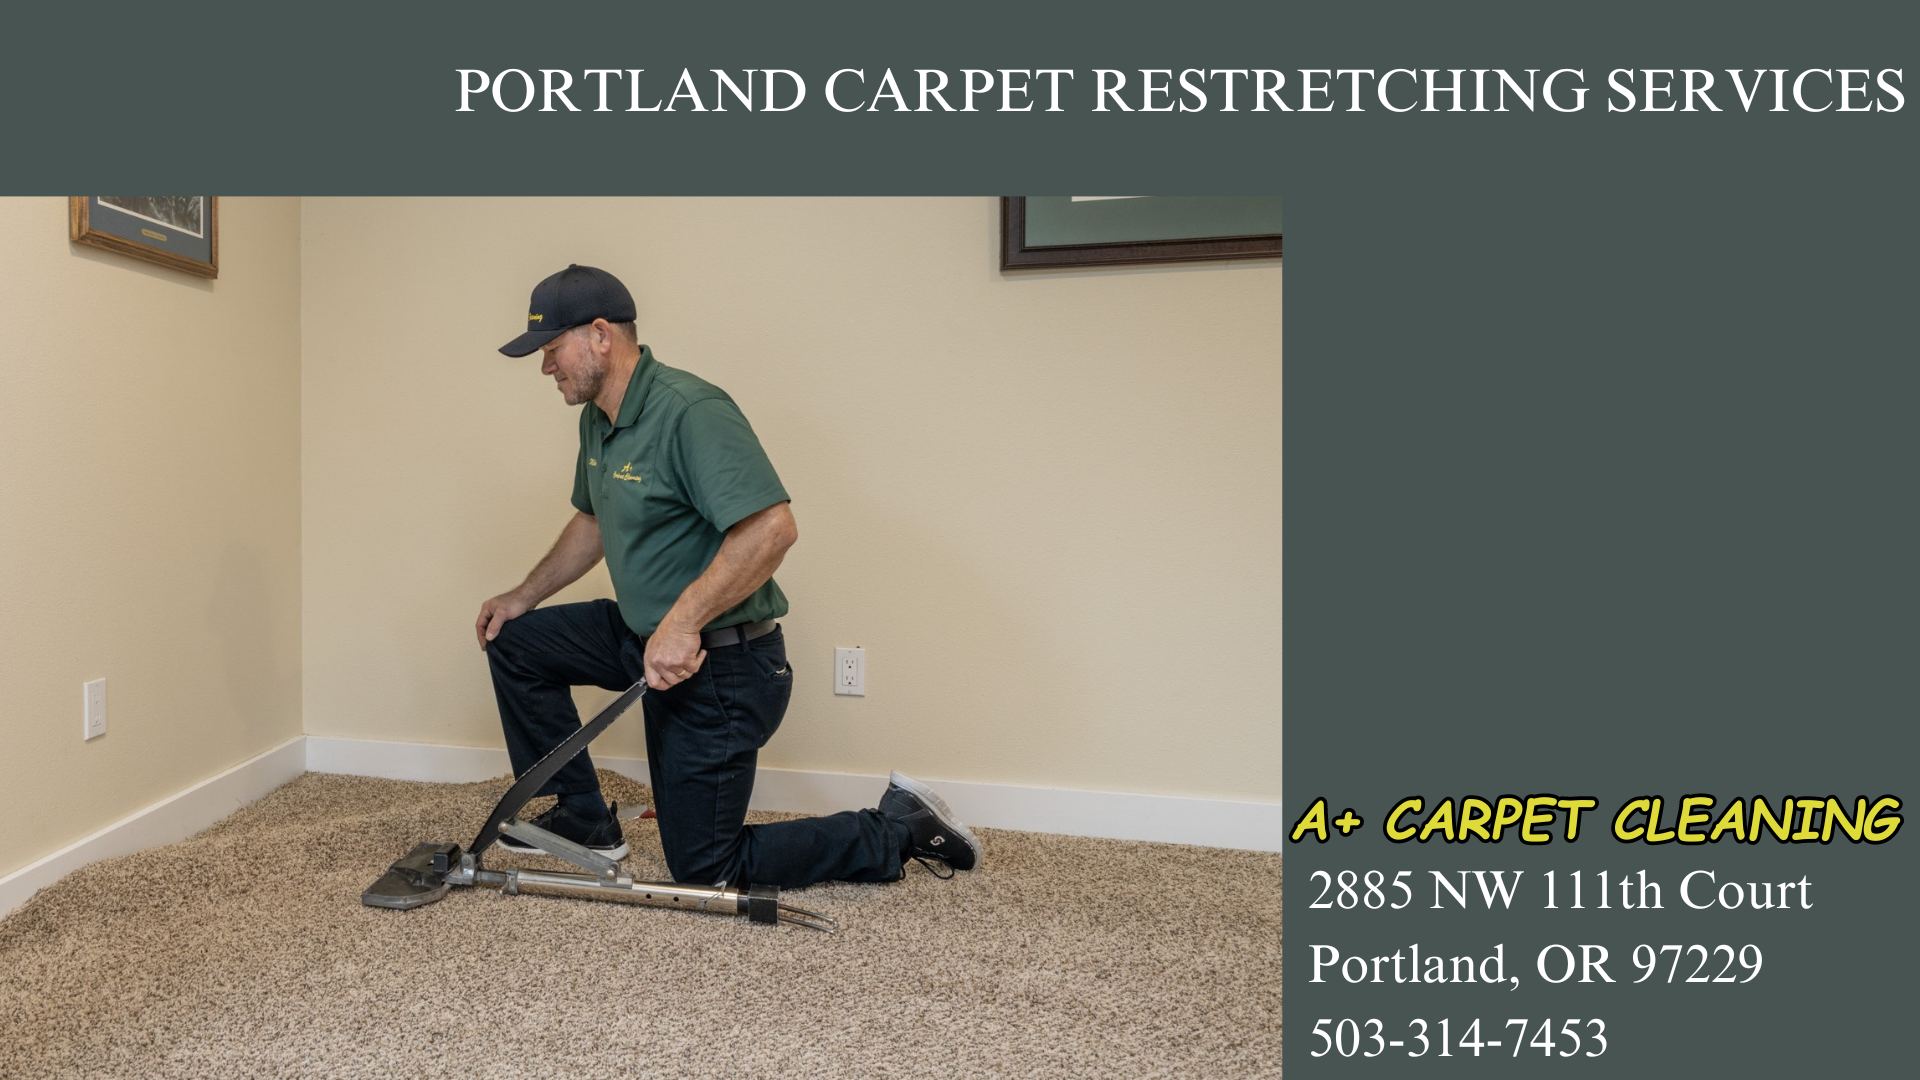 Portland carpet restretch near me